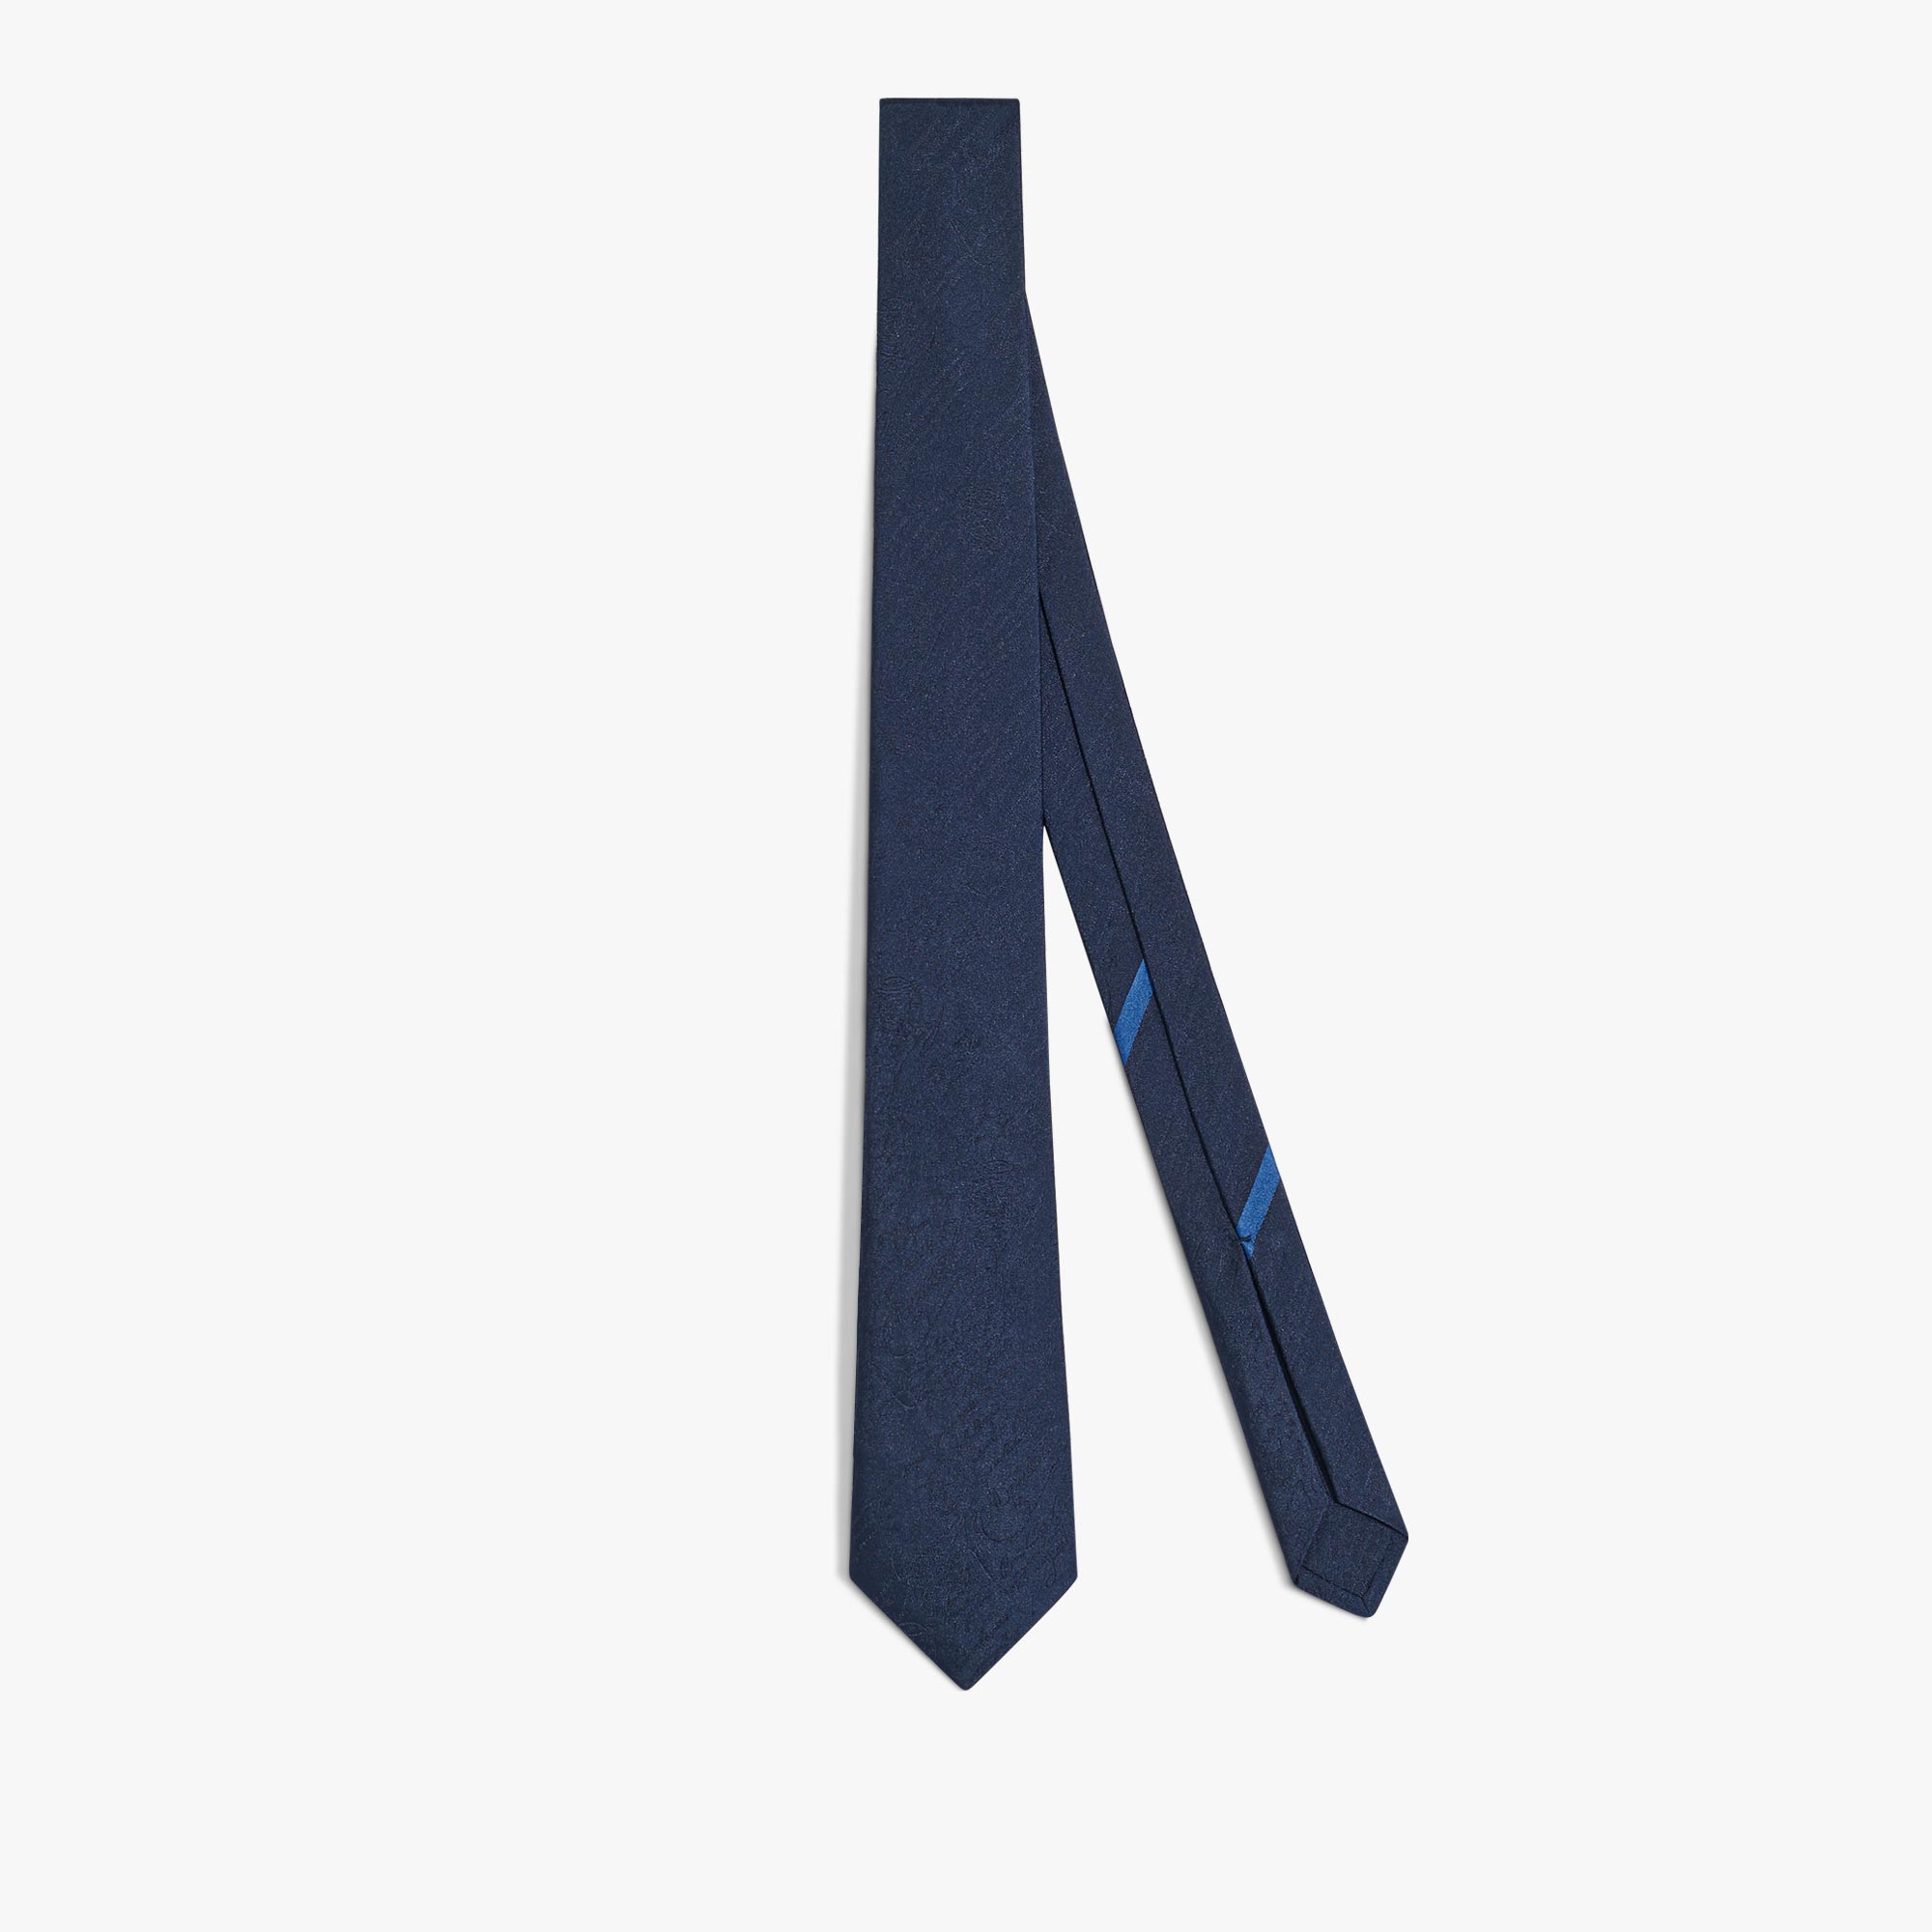 Scritto图纹领带, MIDNIGHT BLUE, hi-res